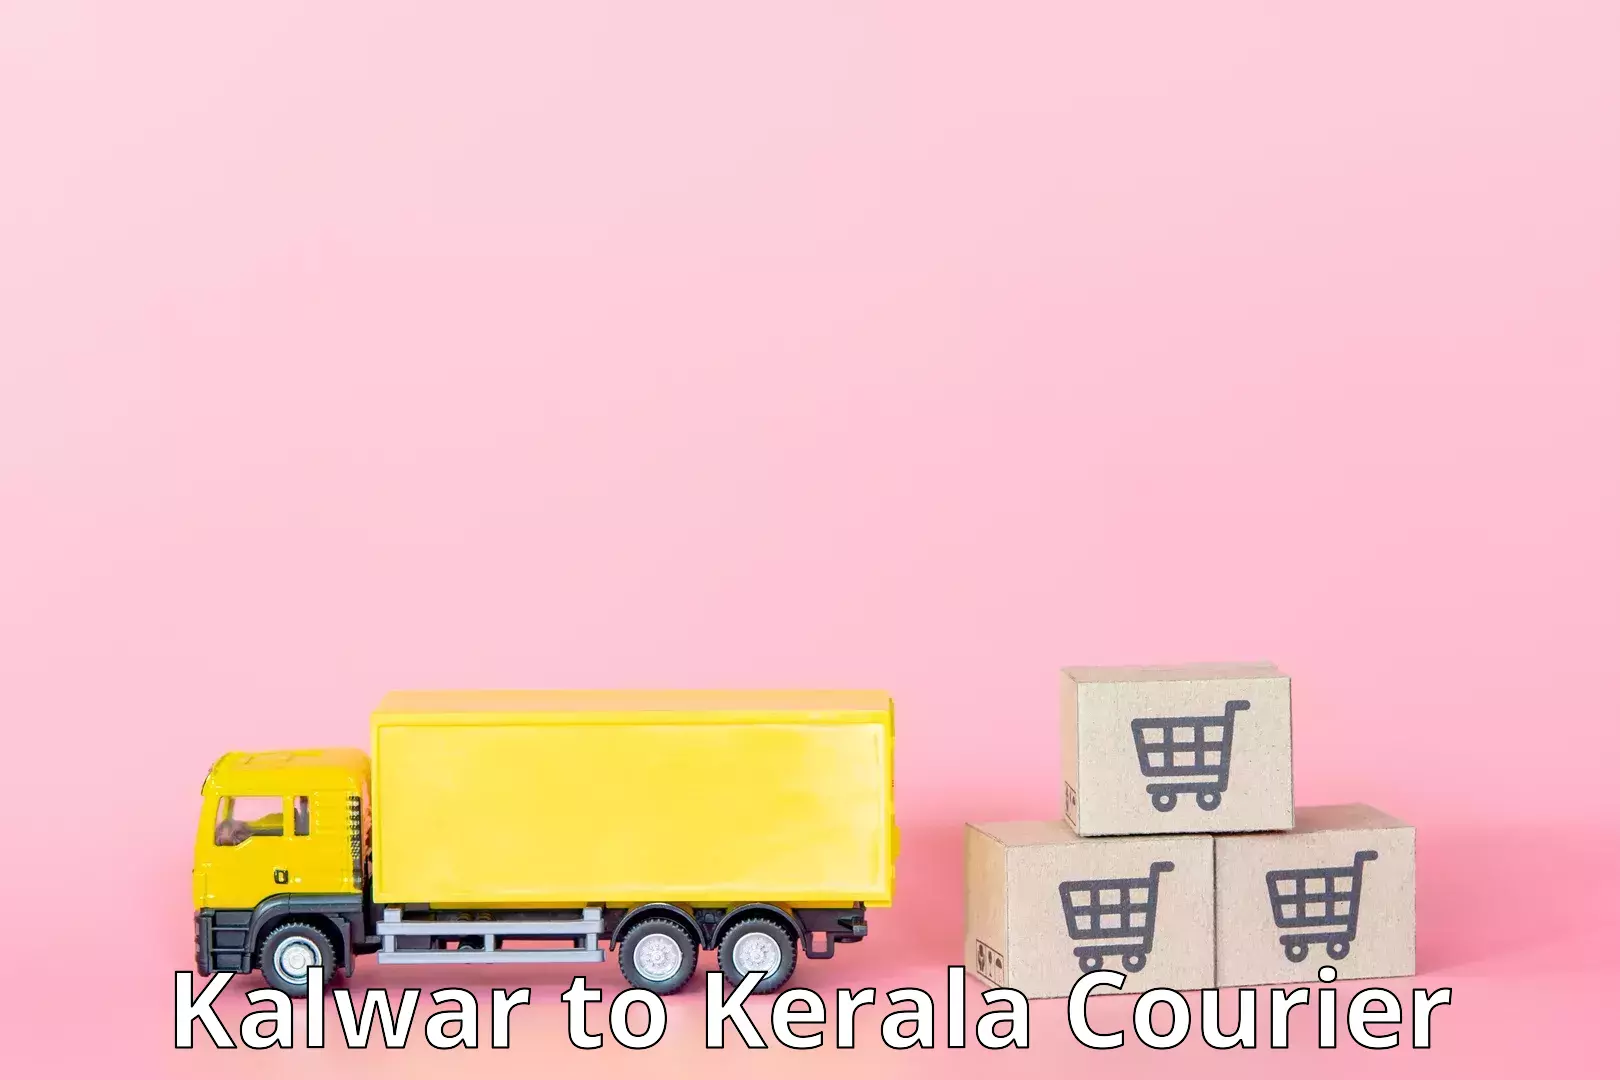 Courier service comparison Kalwar to Punalur